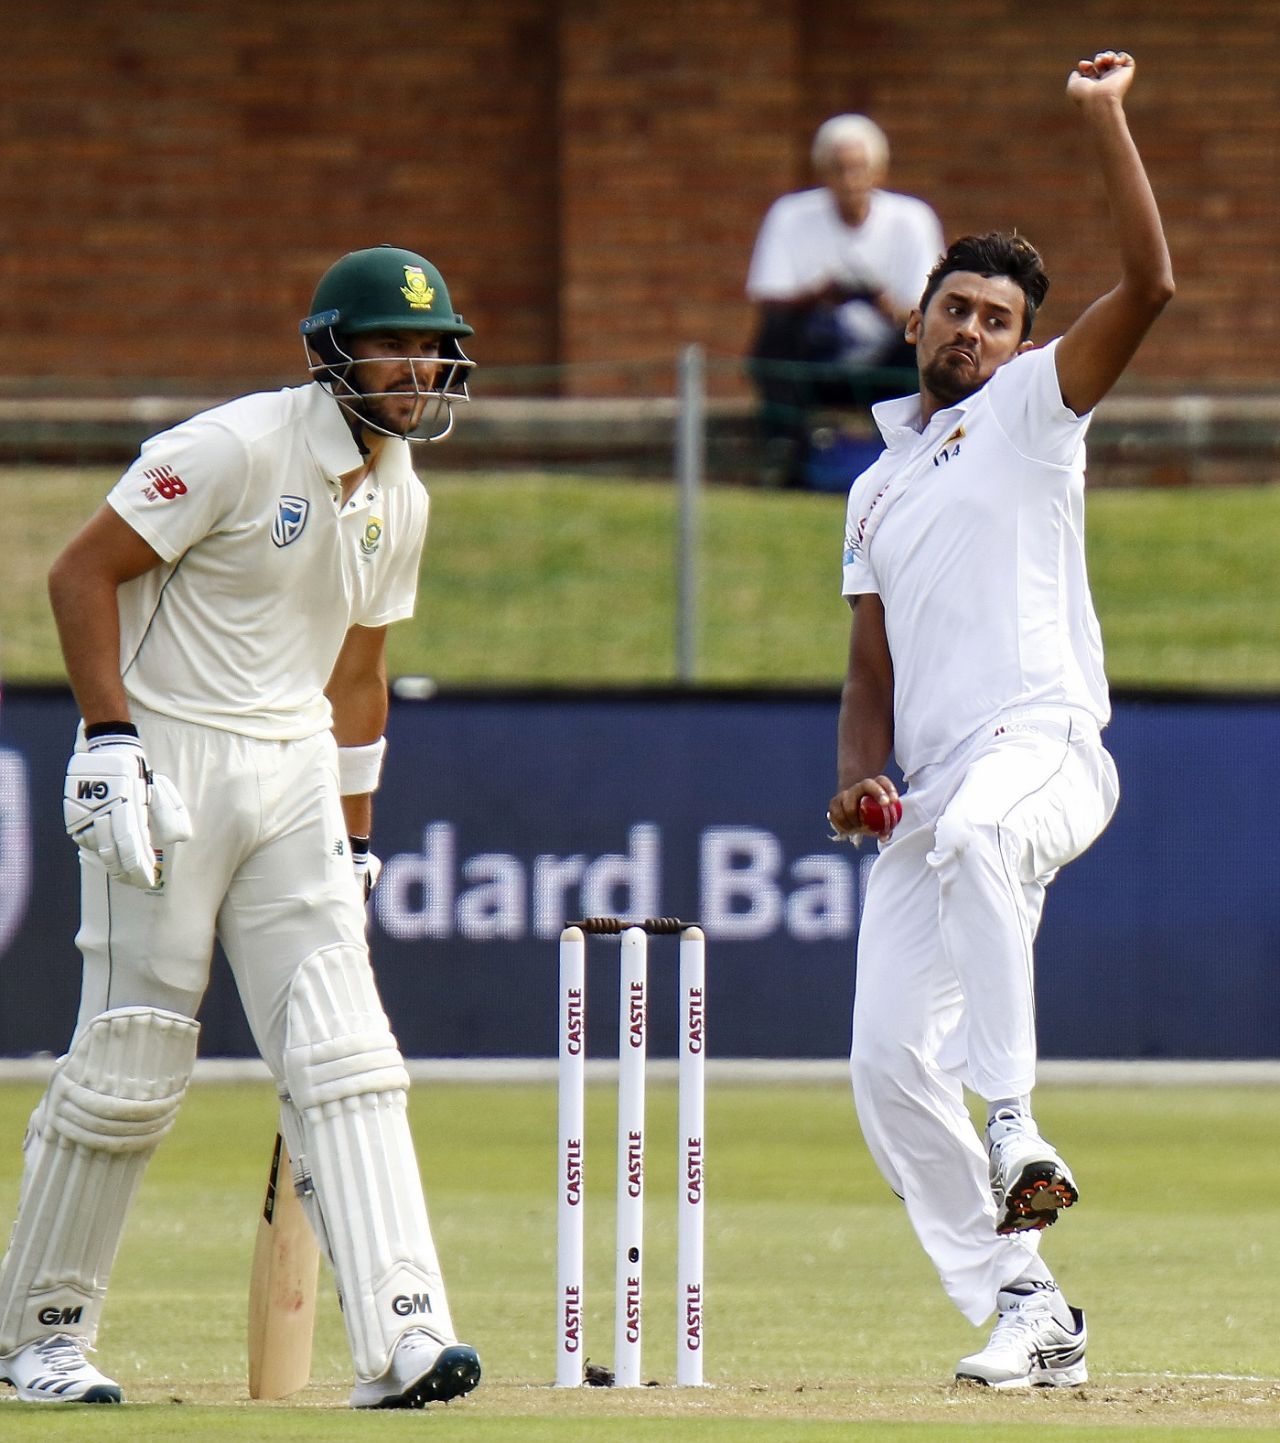 Suranga Lakmal bowls as Aiden Markram looks on, South Africa v Sri Lanka, 2nd Test, Port Elizabeth, 1st day, February 21, 2019